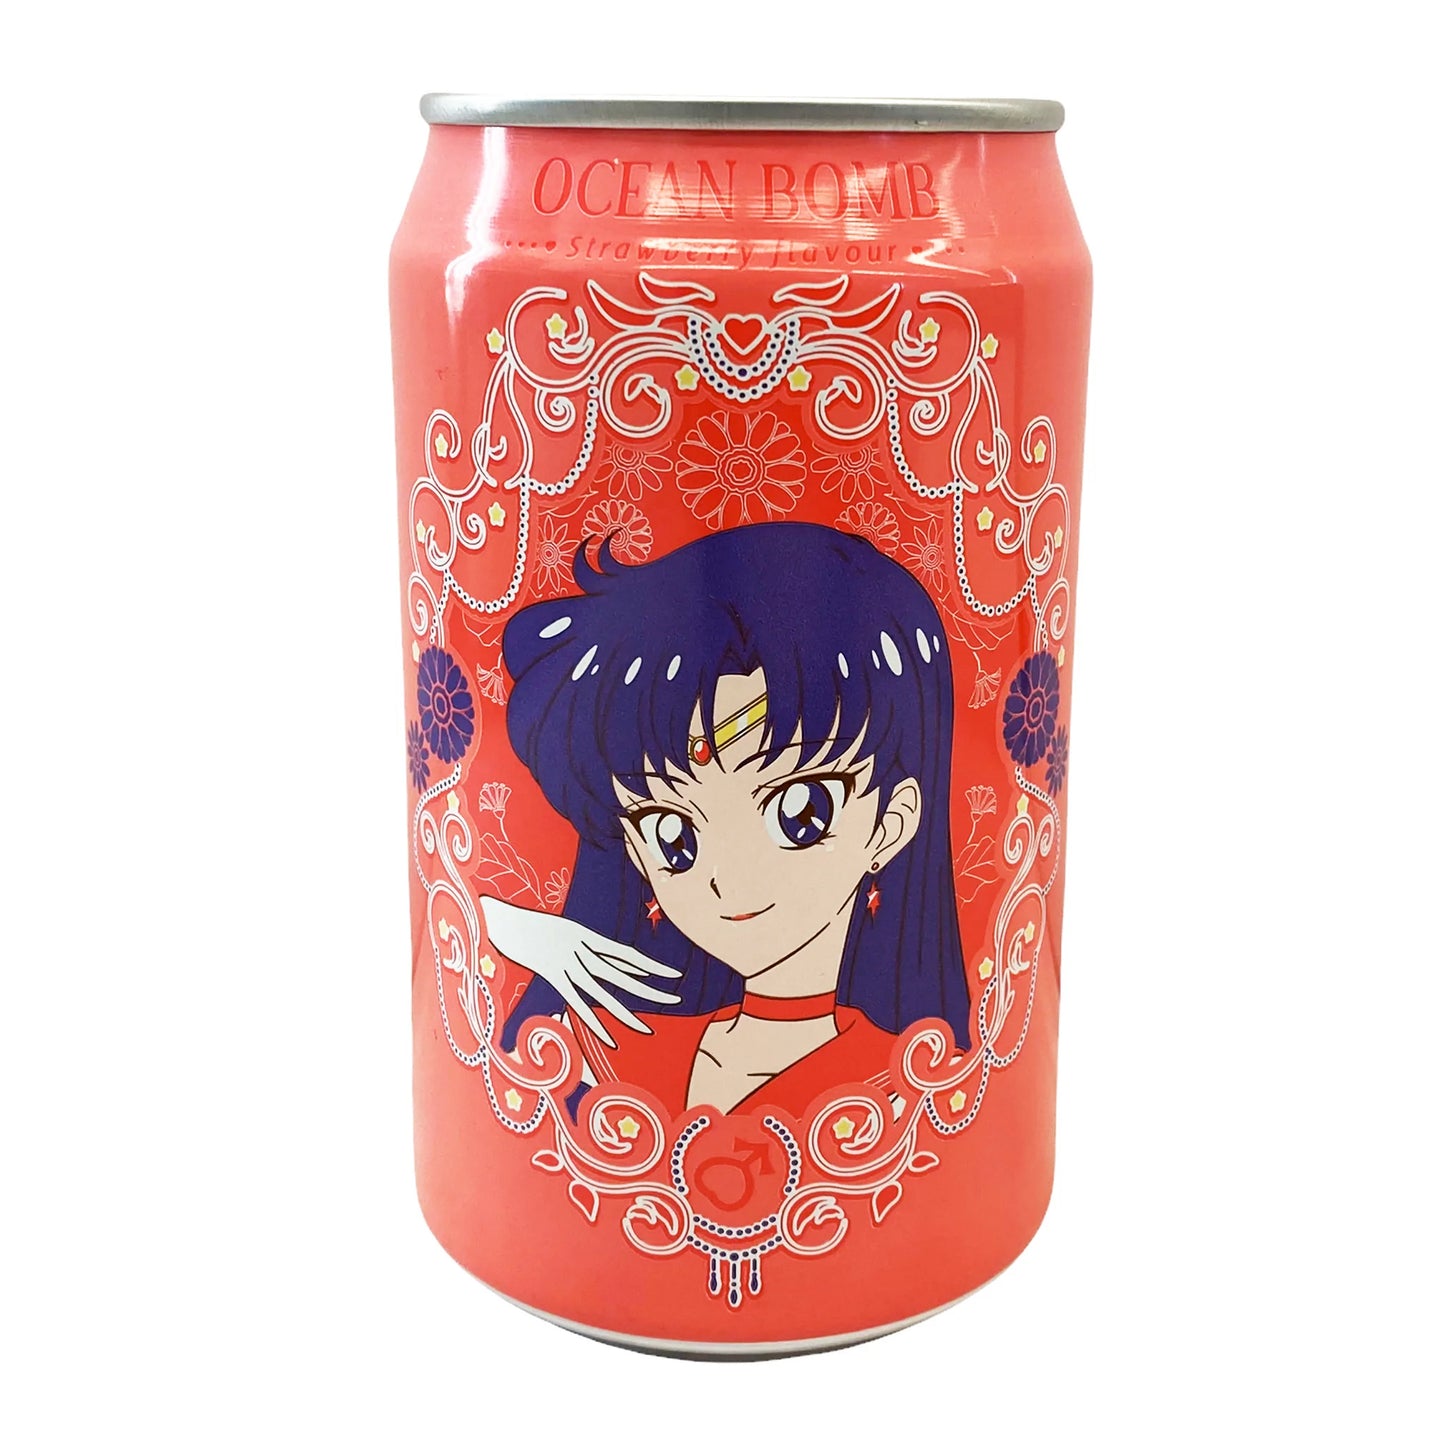 Ocean Bomb Sailor Moon Strawberry Flavor